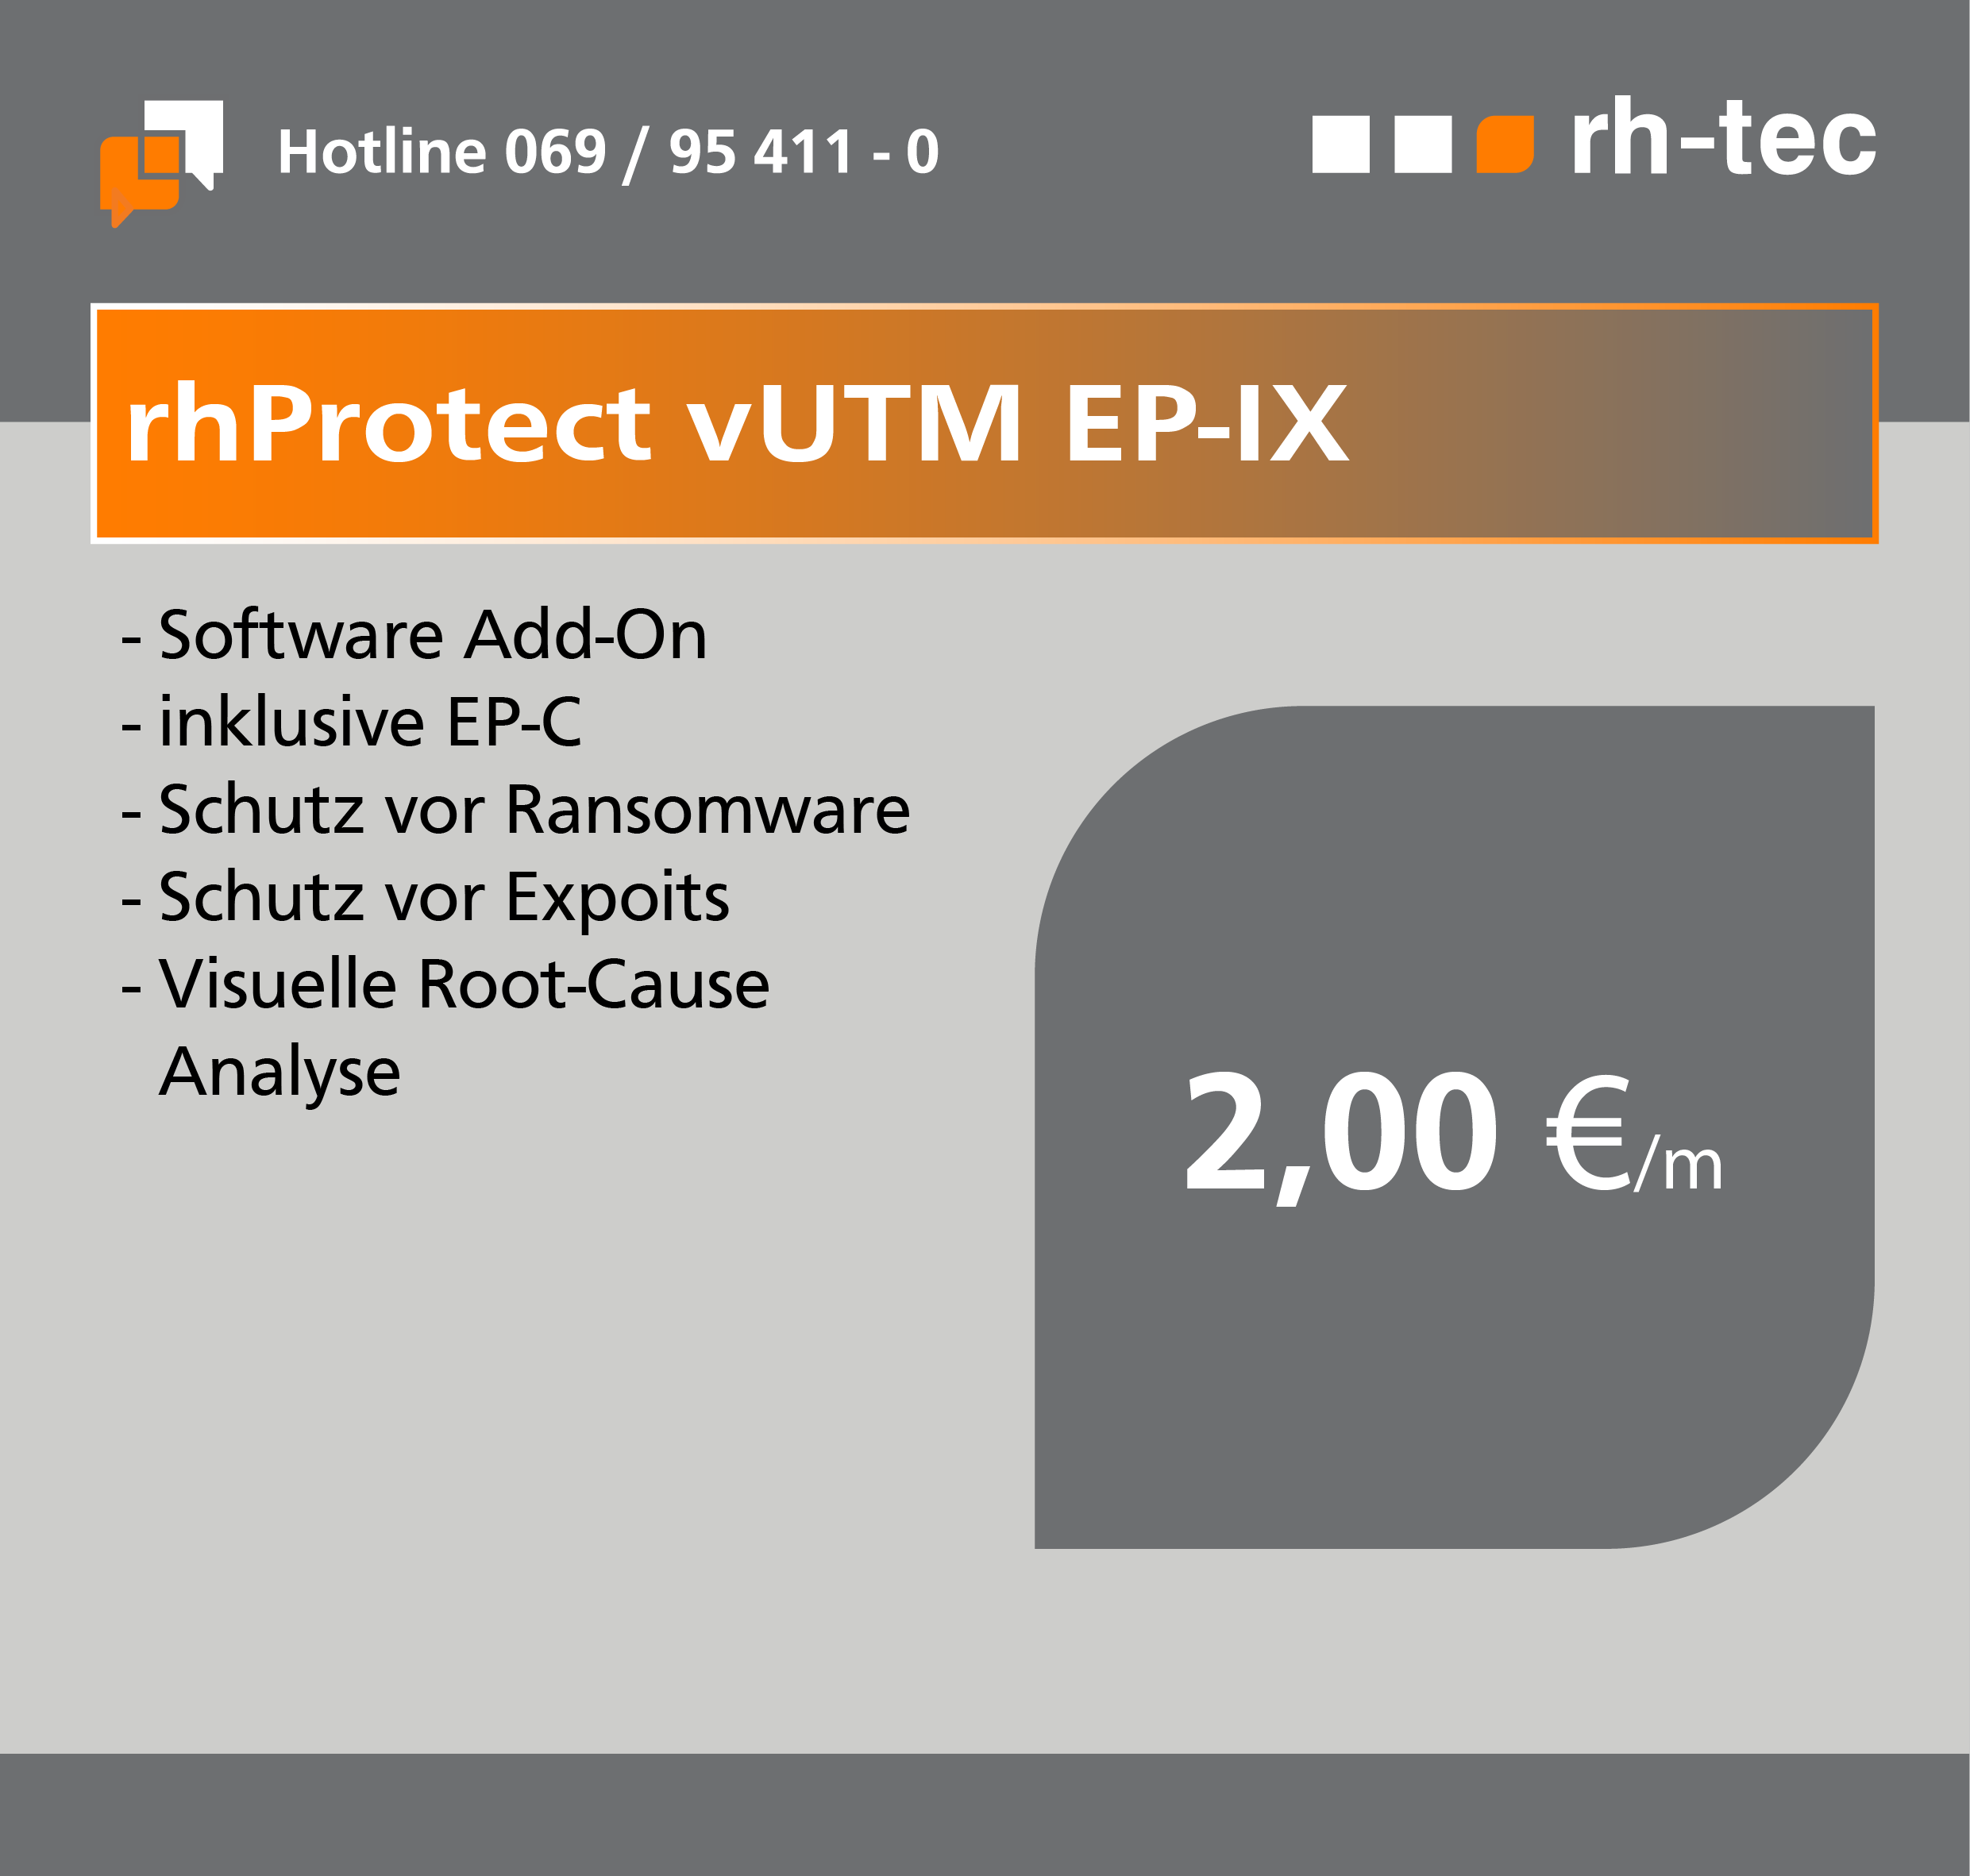 rhProtect vUTM EP-IX